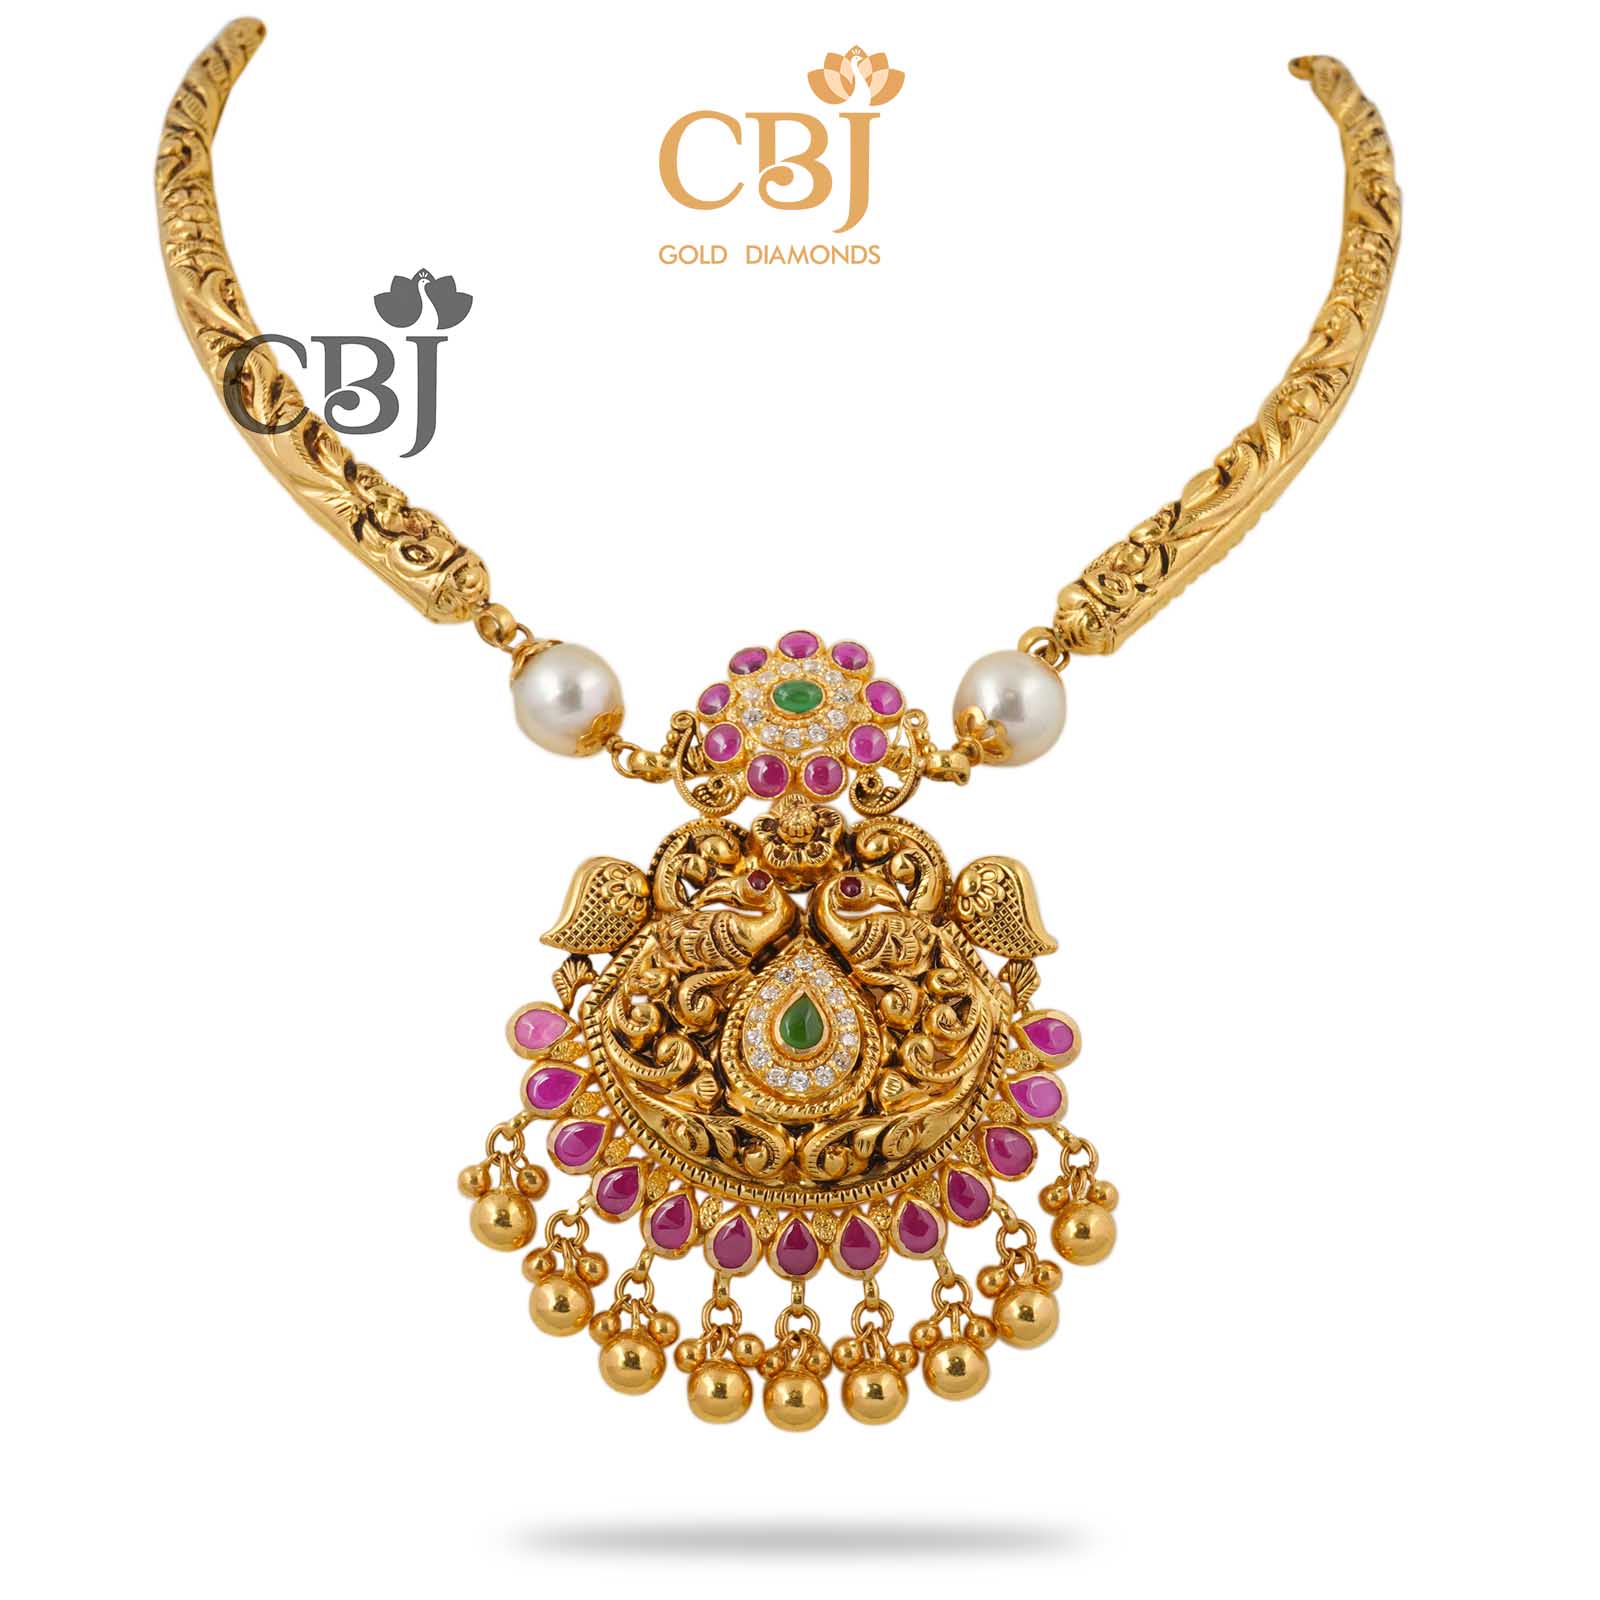 Kanti necklace | Online gold jewellery, Jewelry design necklace, Gold  jewelry fashion